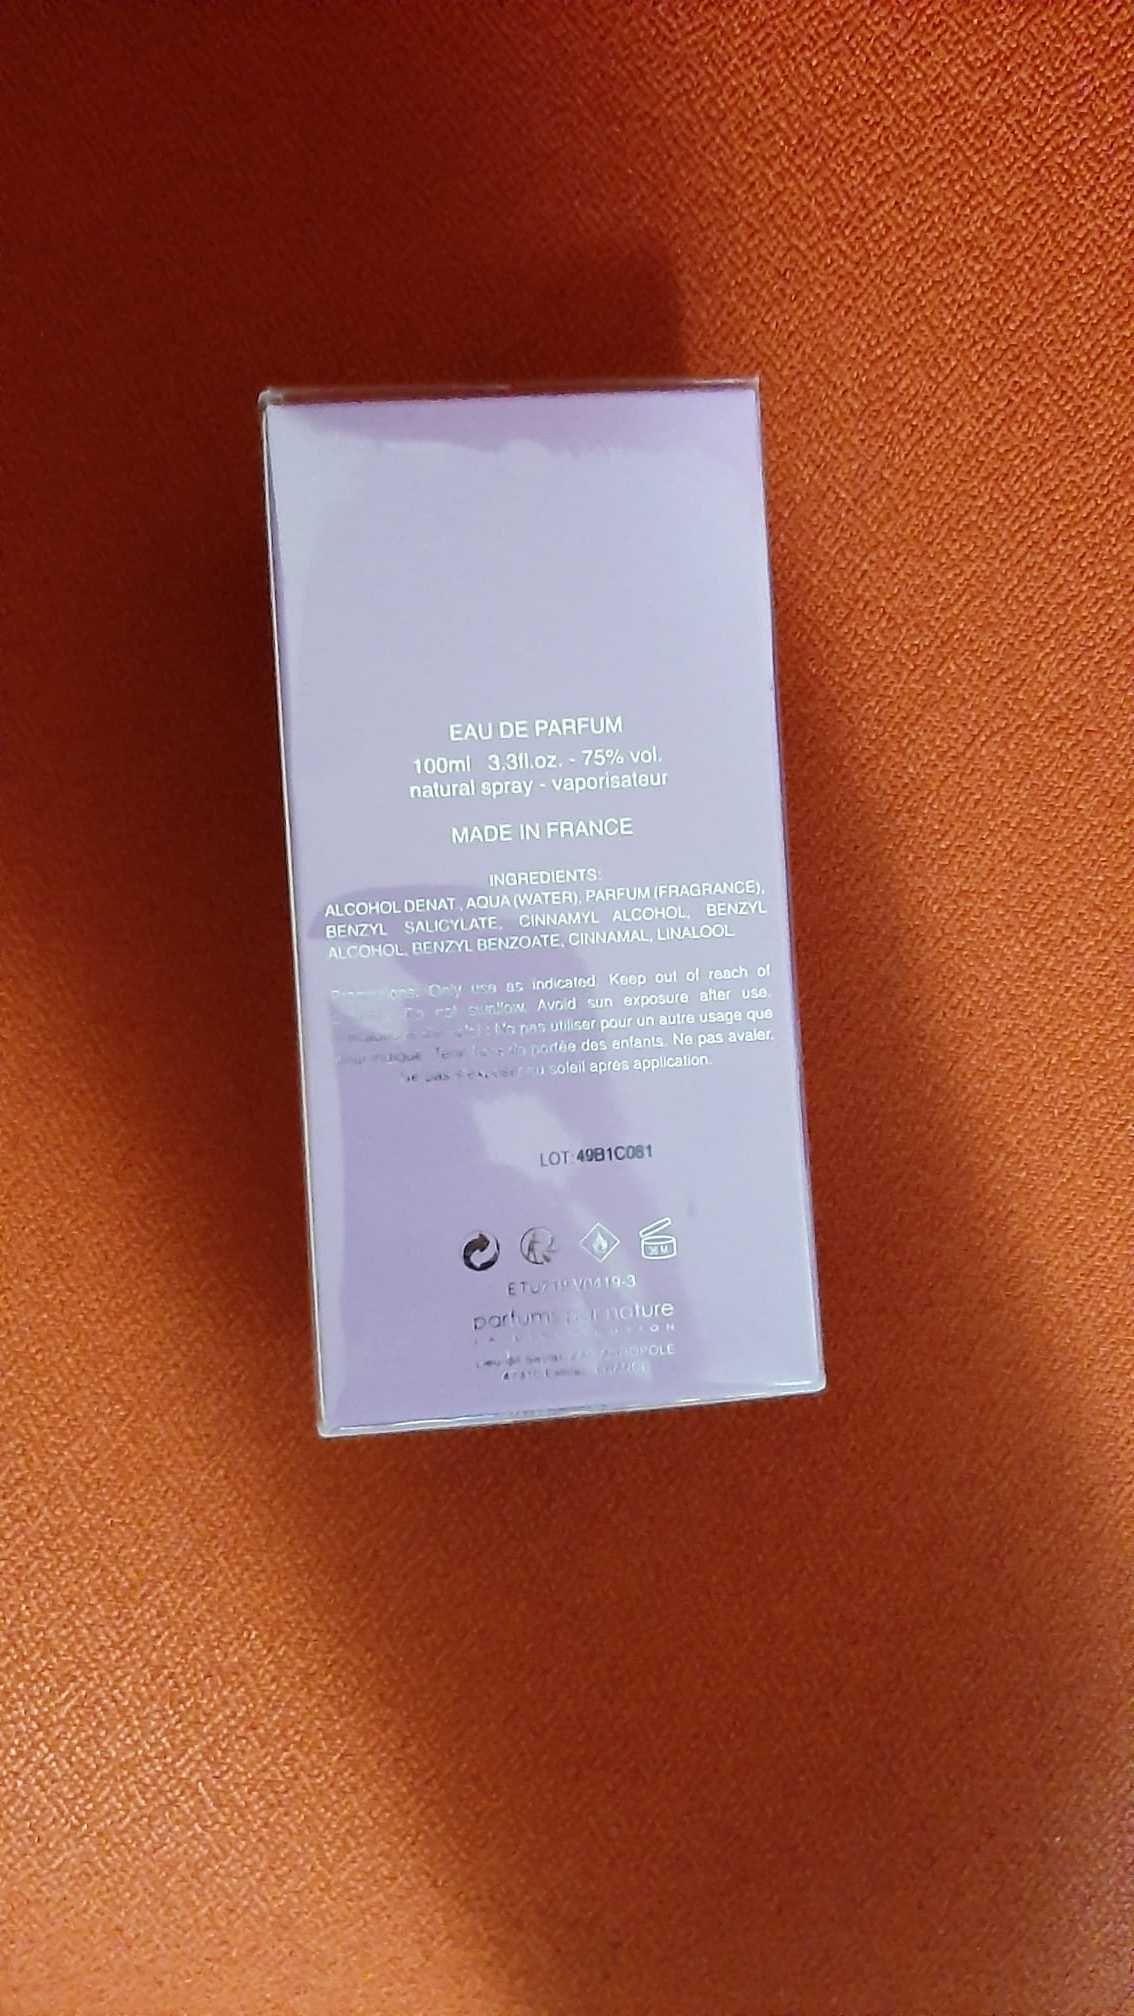 AXIS Elegant Apa de Parfum femei 100 ml